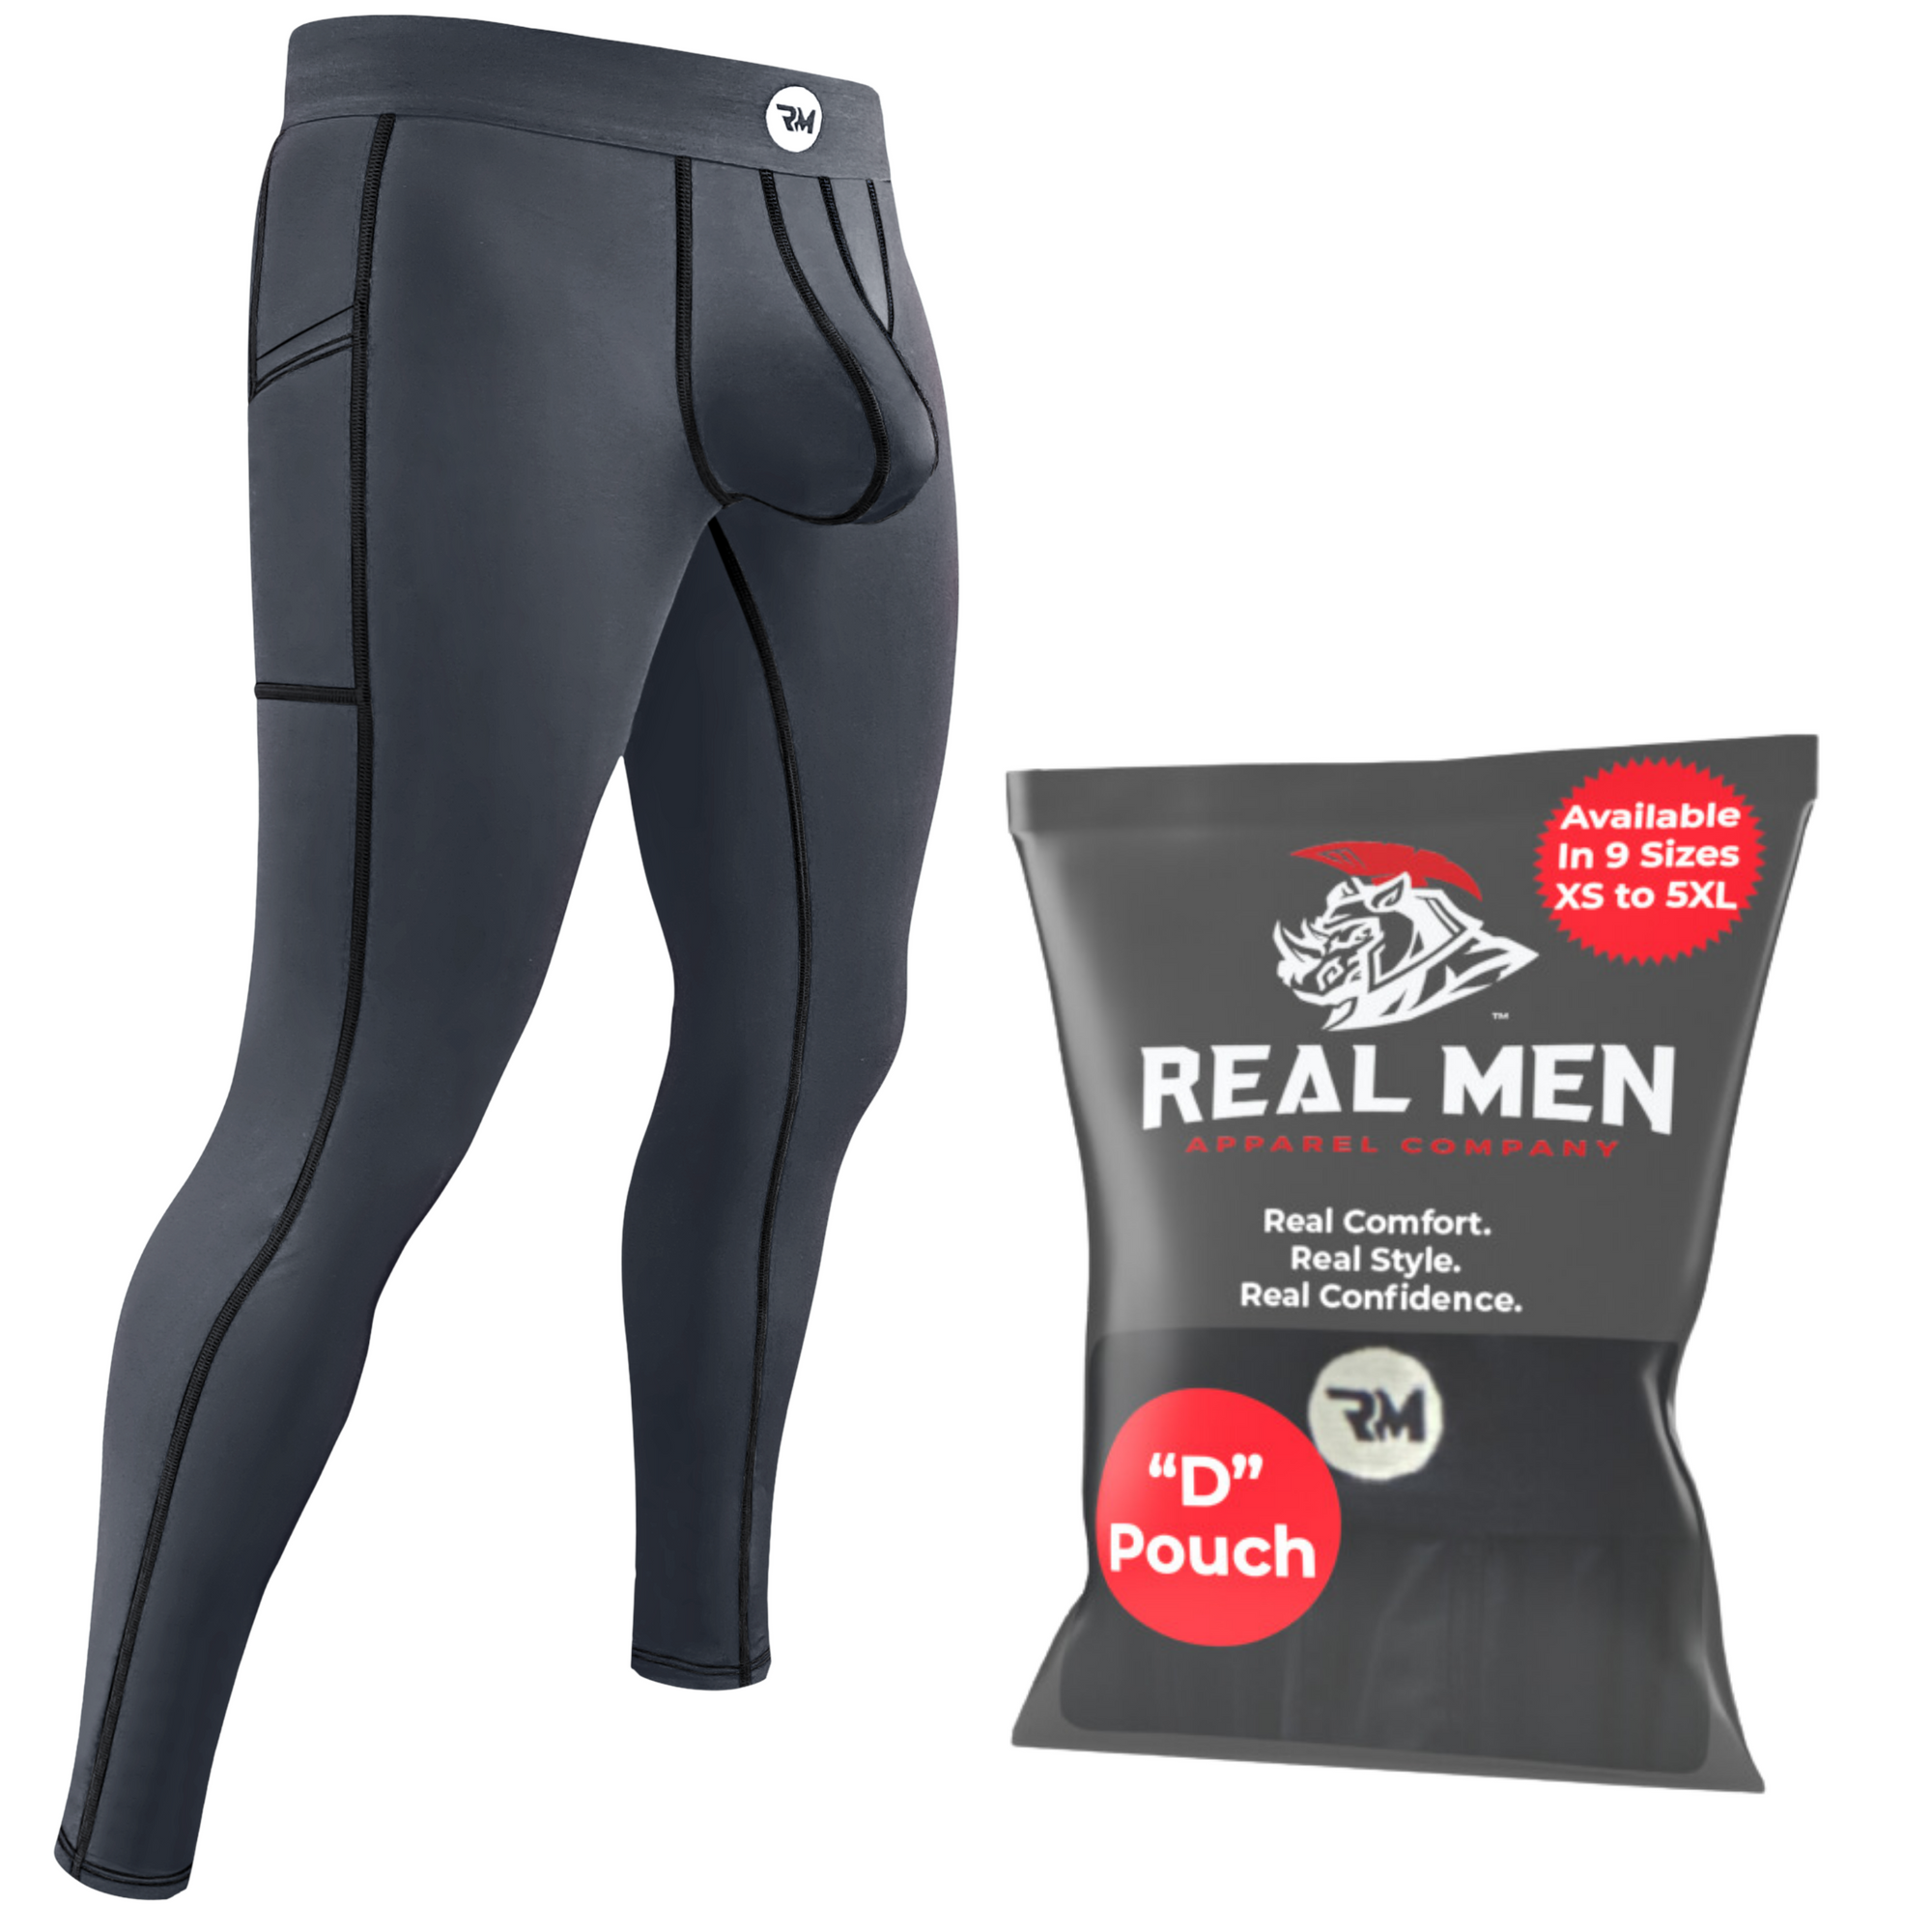  Men's Underwear - RM Real Men / Men's Underwear / Men's  Clothing: Clothing, Shoes & Jewelry